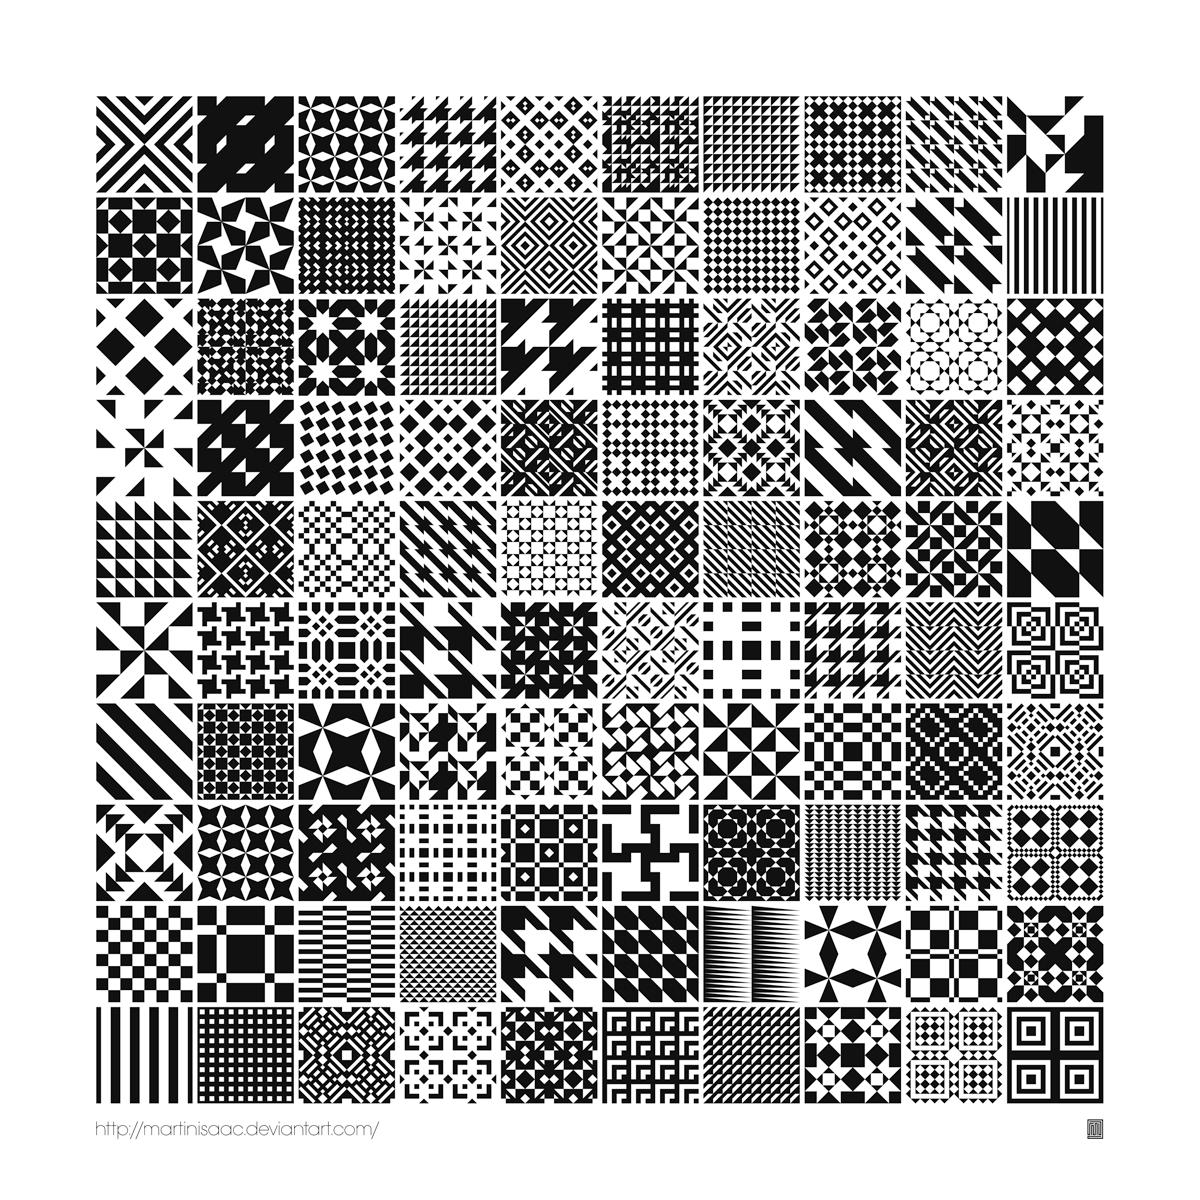 100 Free Monochrome Geometric Patterns by Martin Isaac